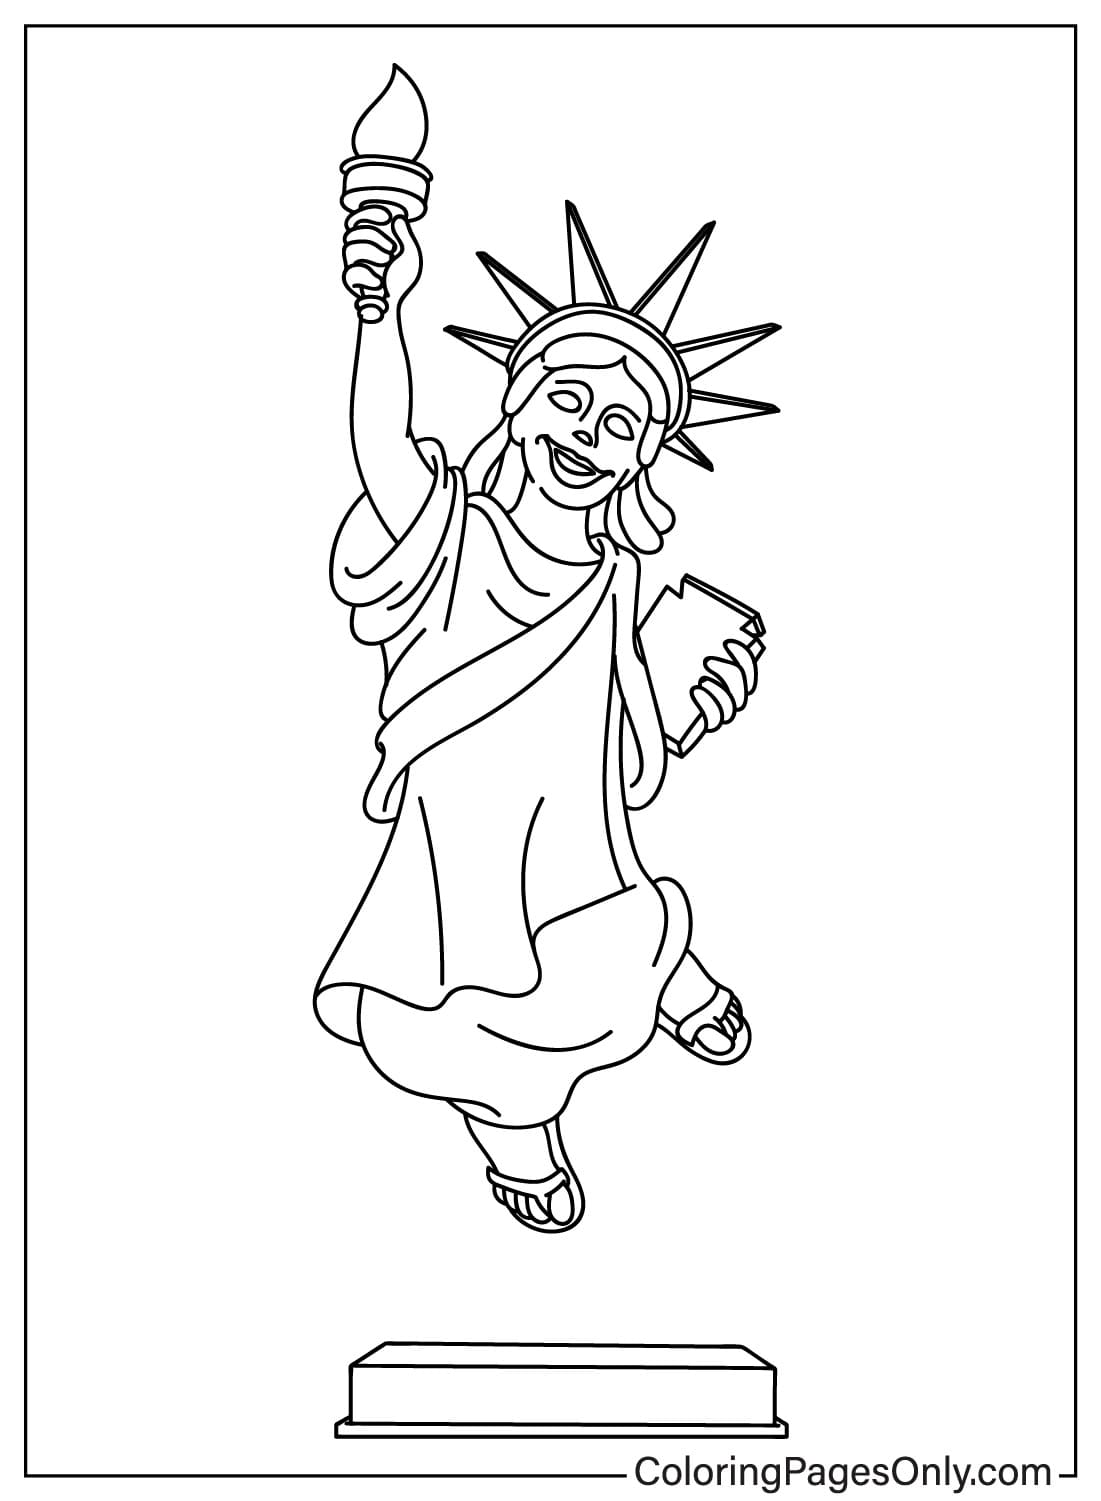 Página para colorear de la Estatua de la Libertad JPG